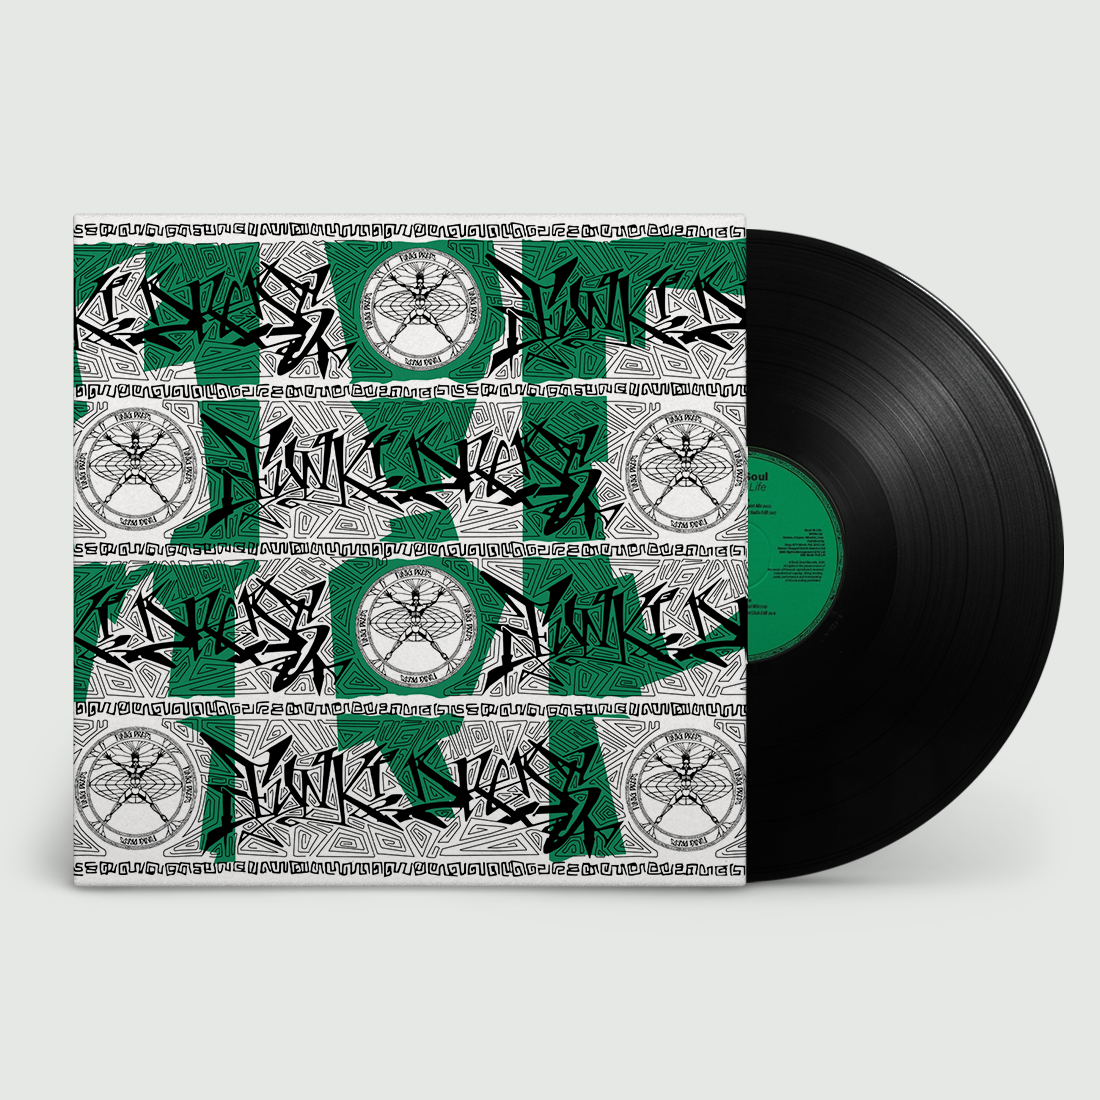 Back II Life (Zepherin Saint Remixes): Vinyl LP